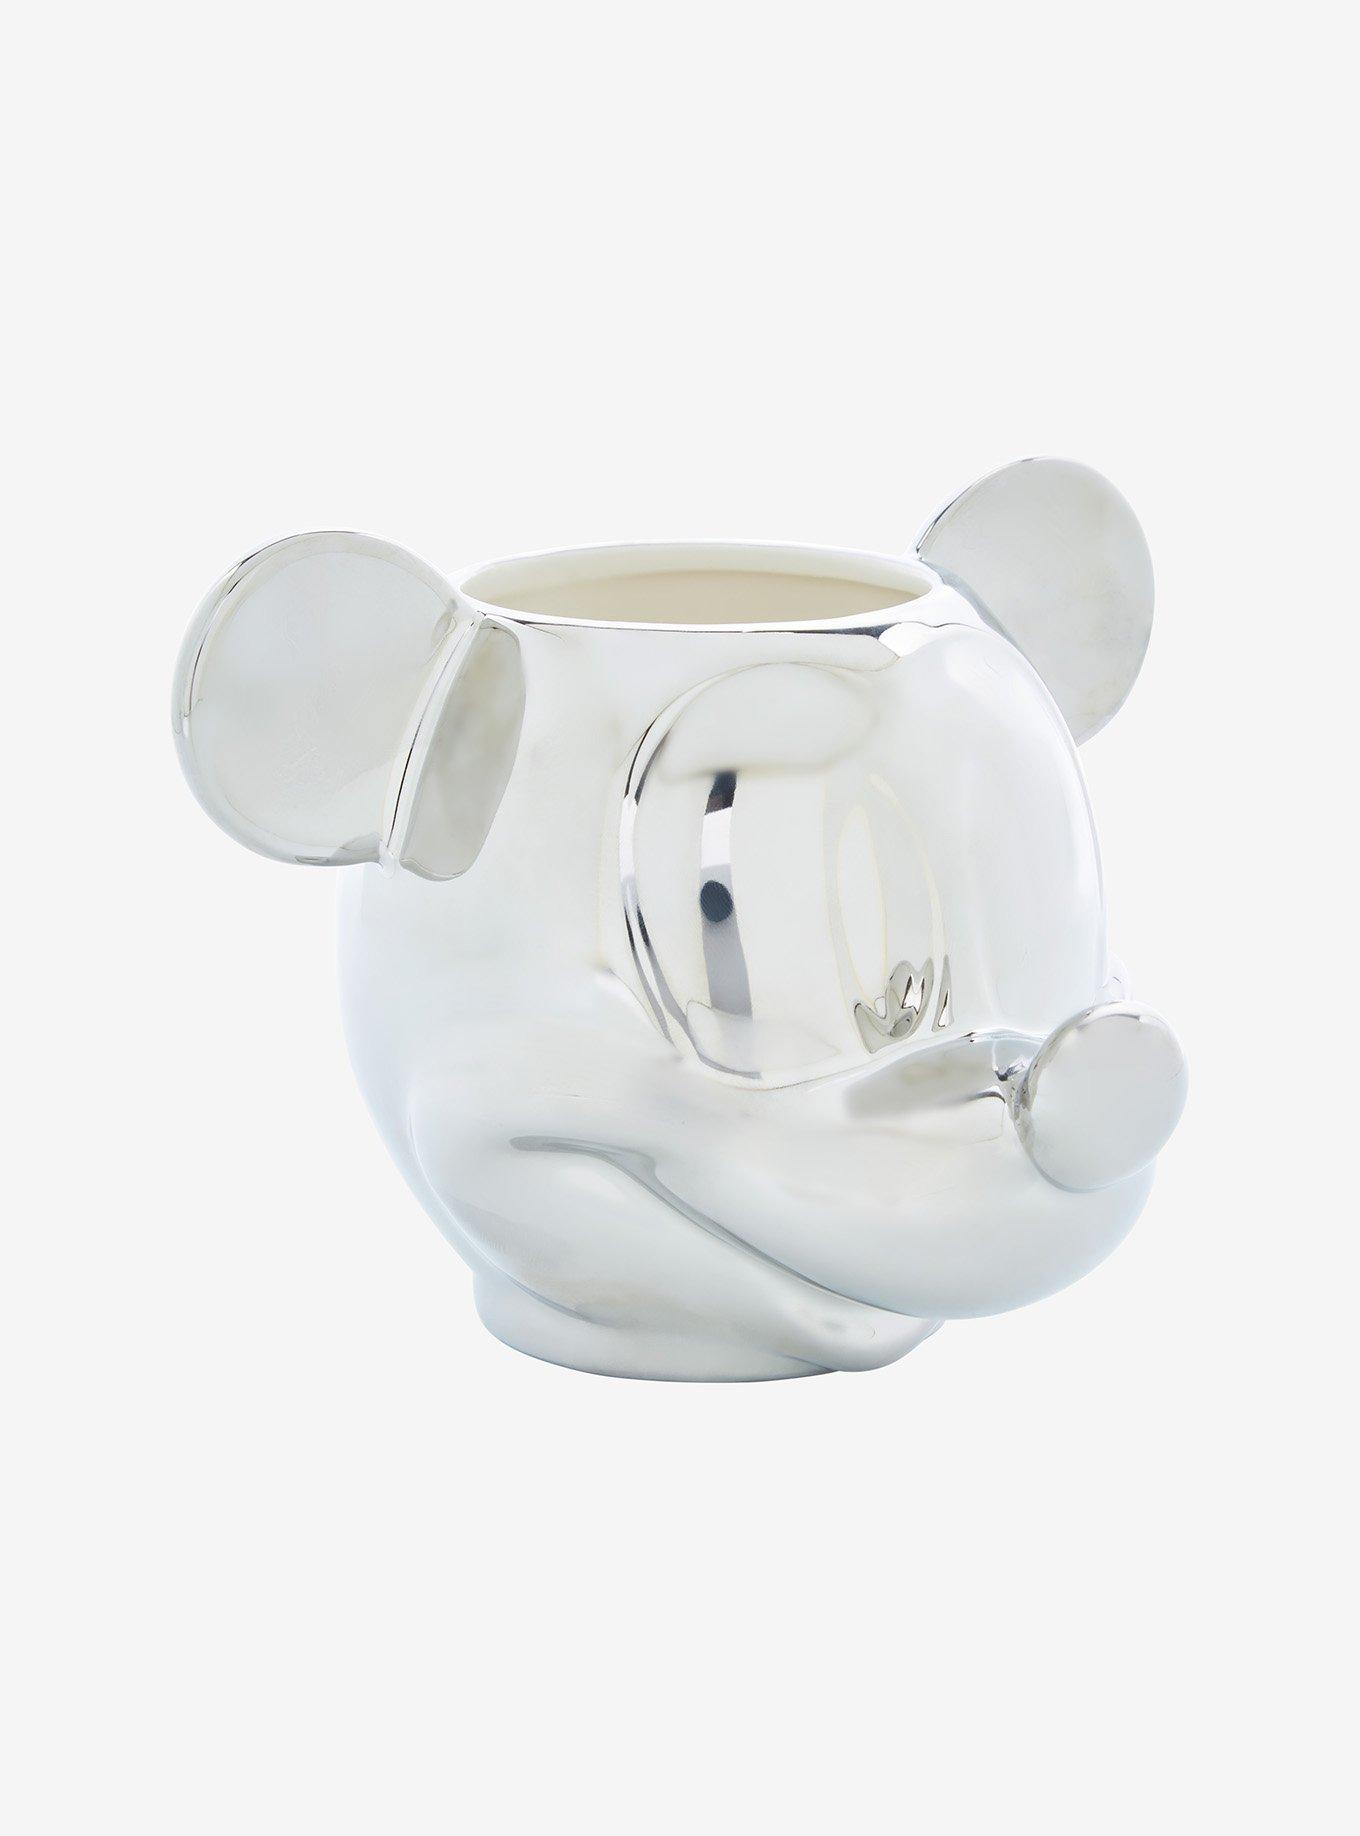 Mickey Mouse Face 3D Ceramic Mug